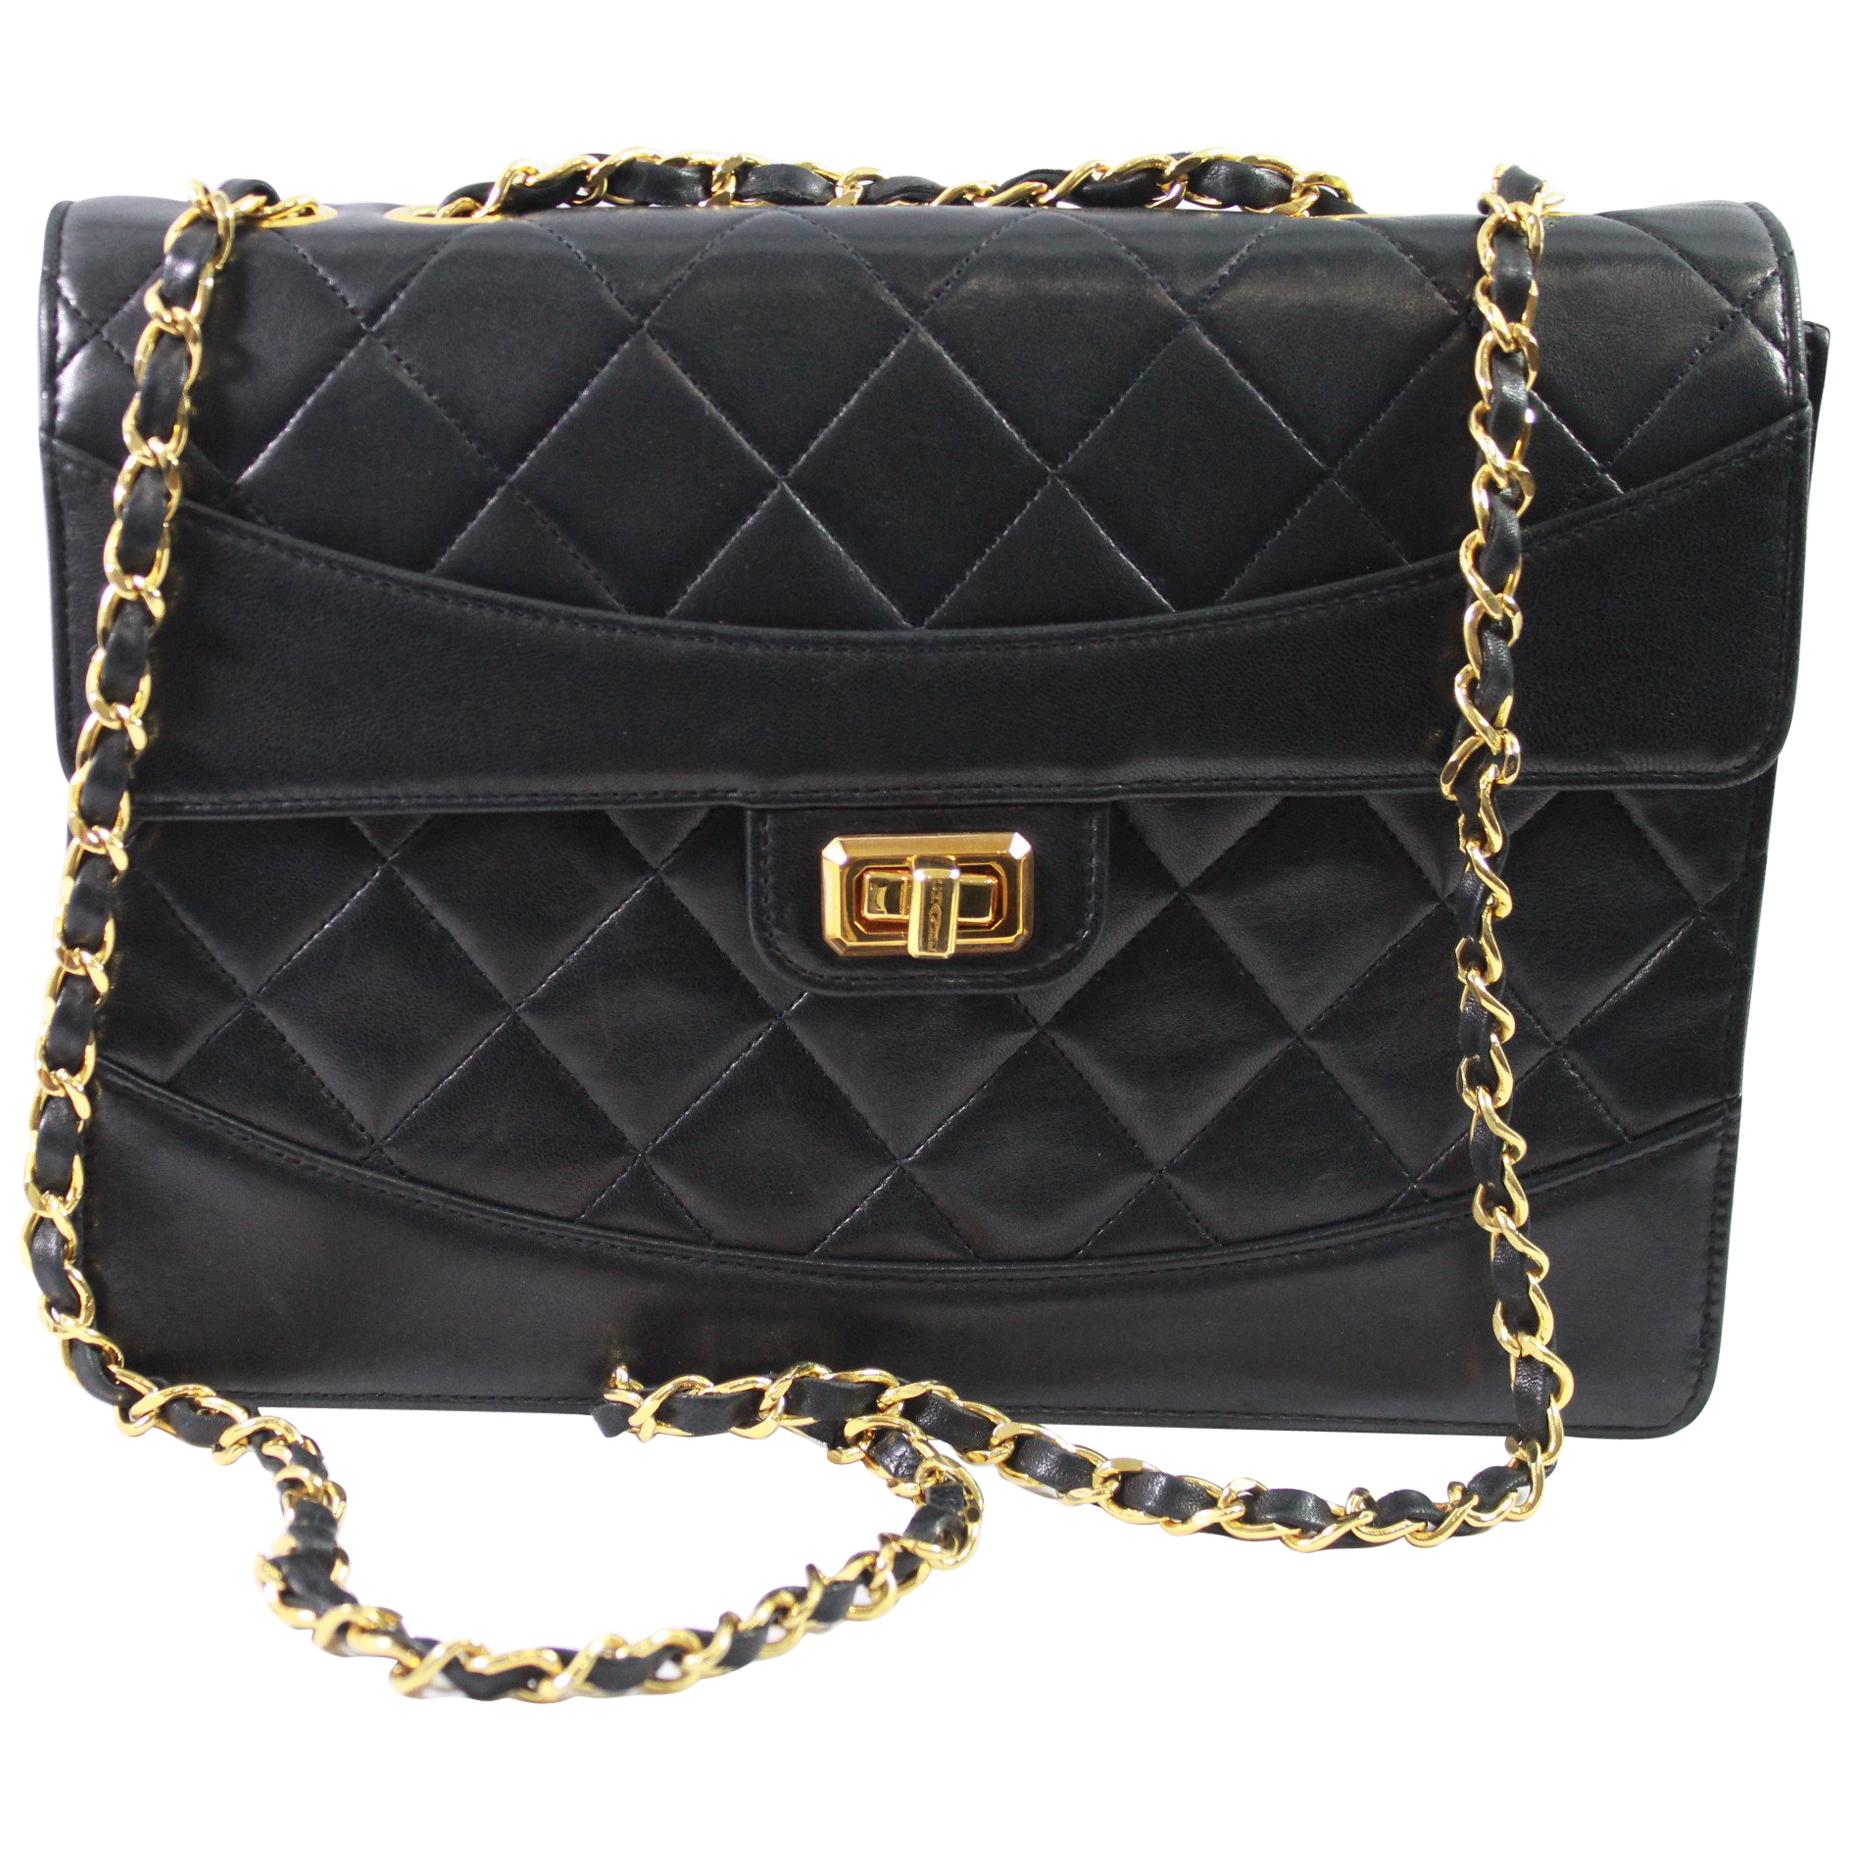 1991 Vintage Chanel Black Lambskin Leather Bag with 2.55 Golden ...